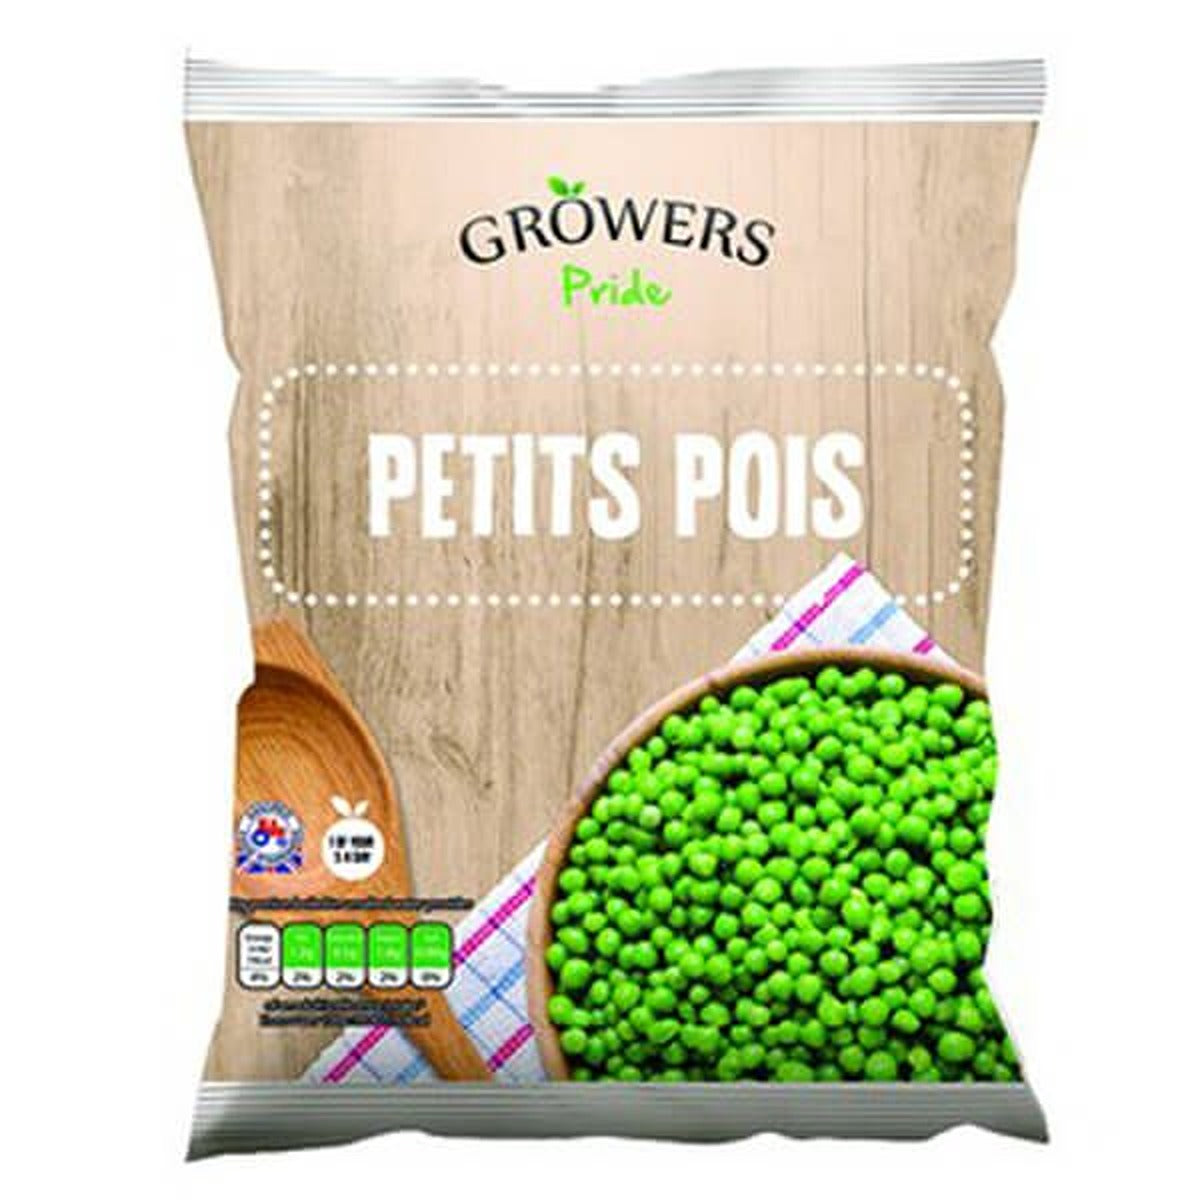 Growers Pride - Green Peas - 450g - Continental Food Store